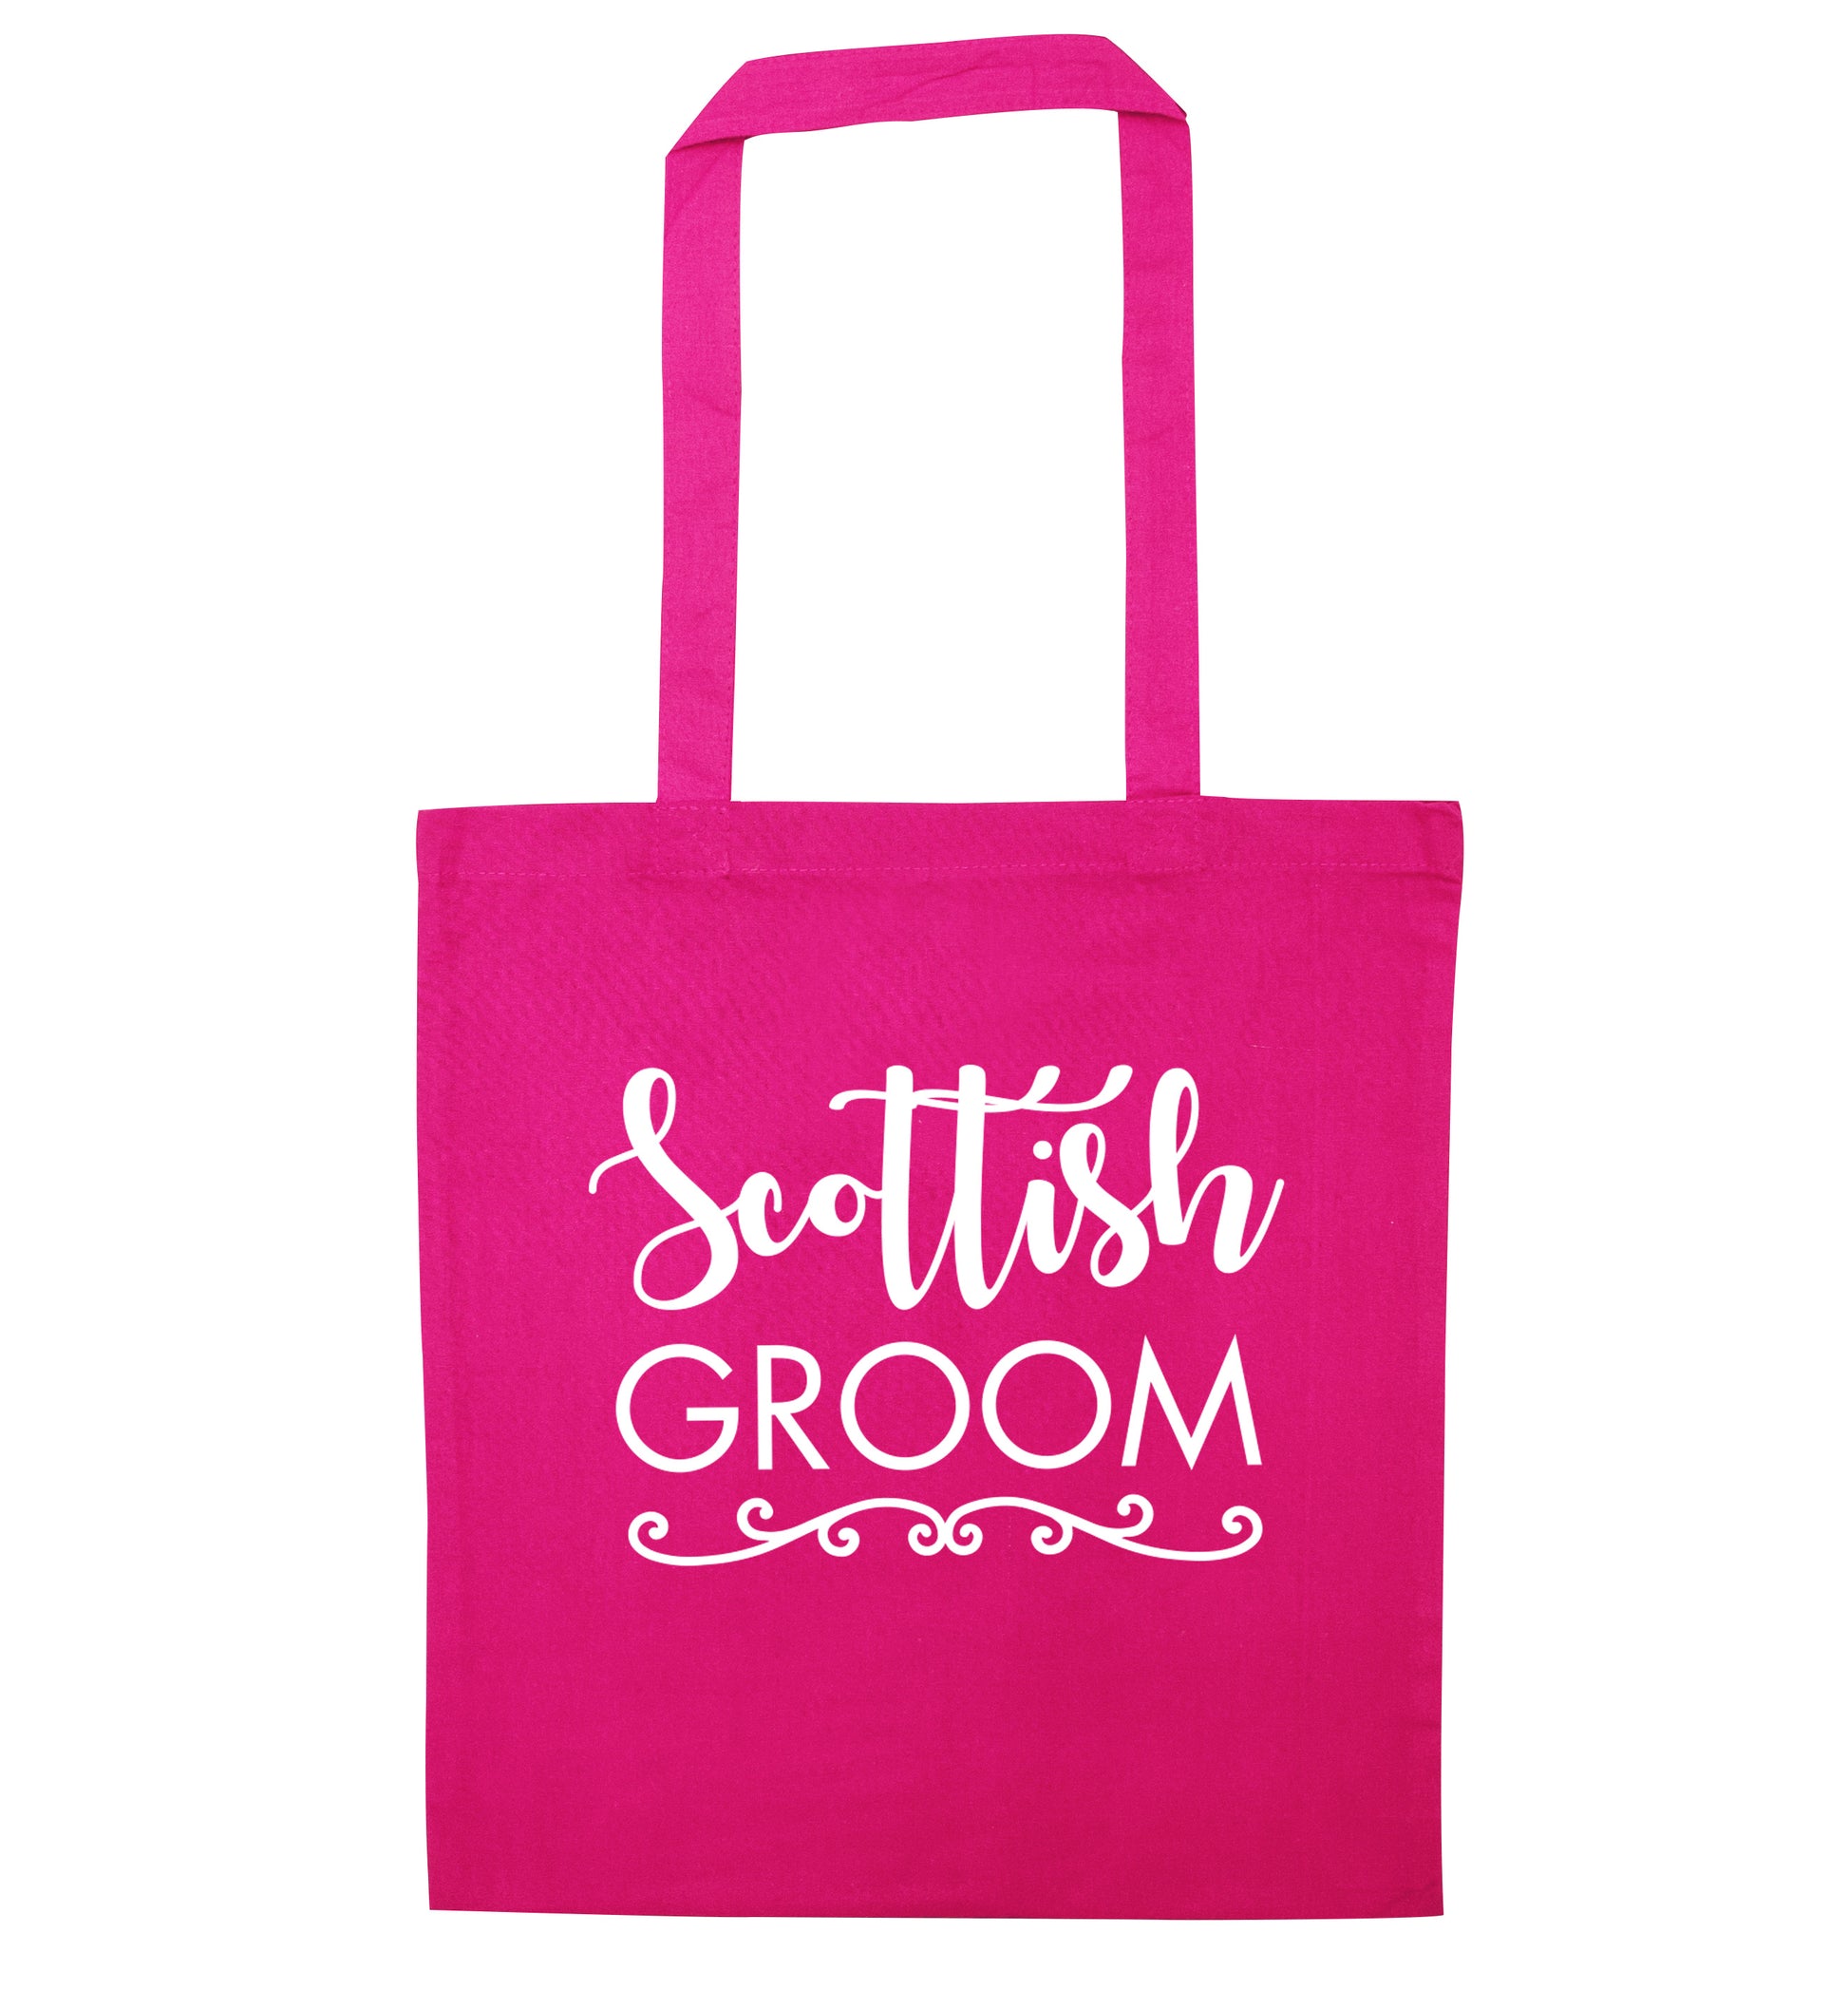 Scottish groom pink tote bag